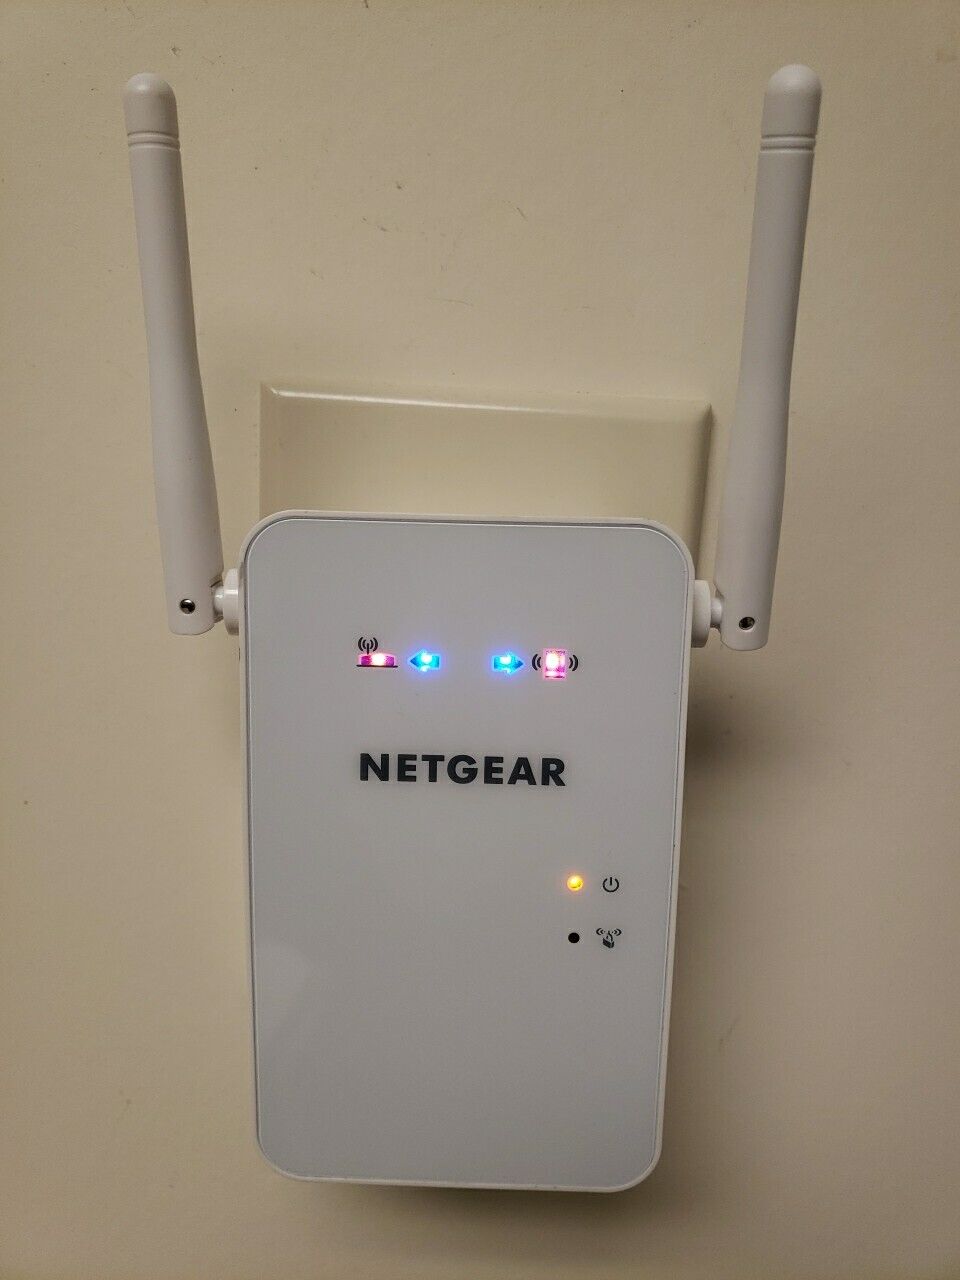 NETGEAR EX6100v2 Dual Band Gigabit AC750 Wi-Fi Range Extender-TESTED